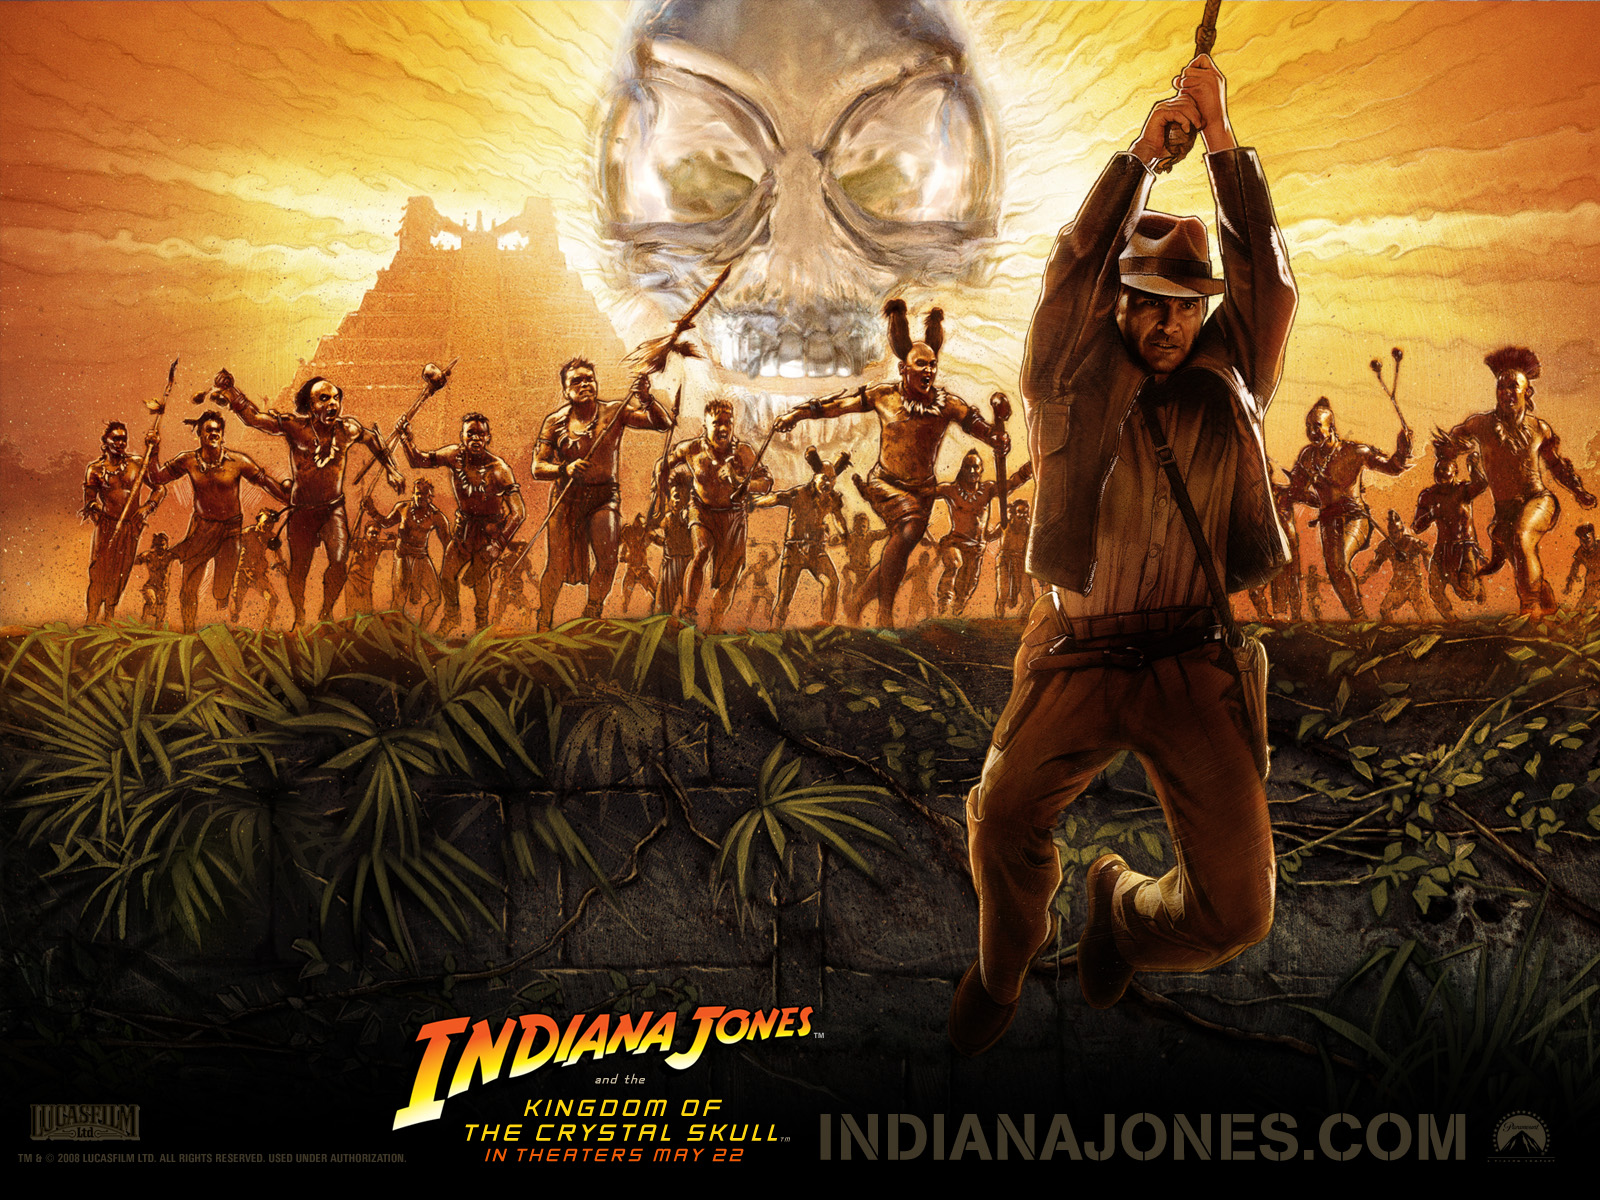 "Indiana Jones and the Kingdom of the Crystal Skull" desktop wallpaper (1600 x 1200 pixels)